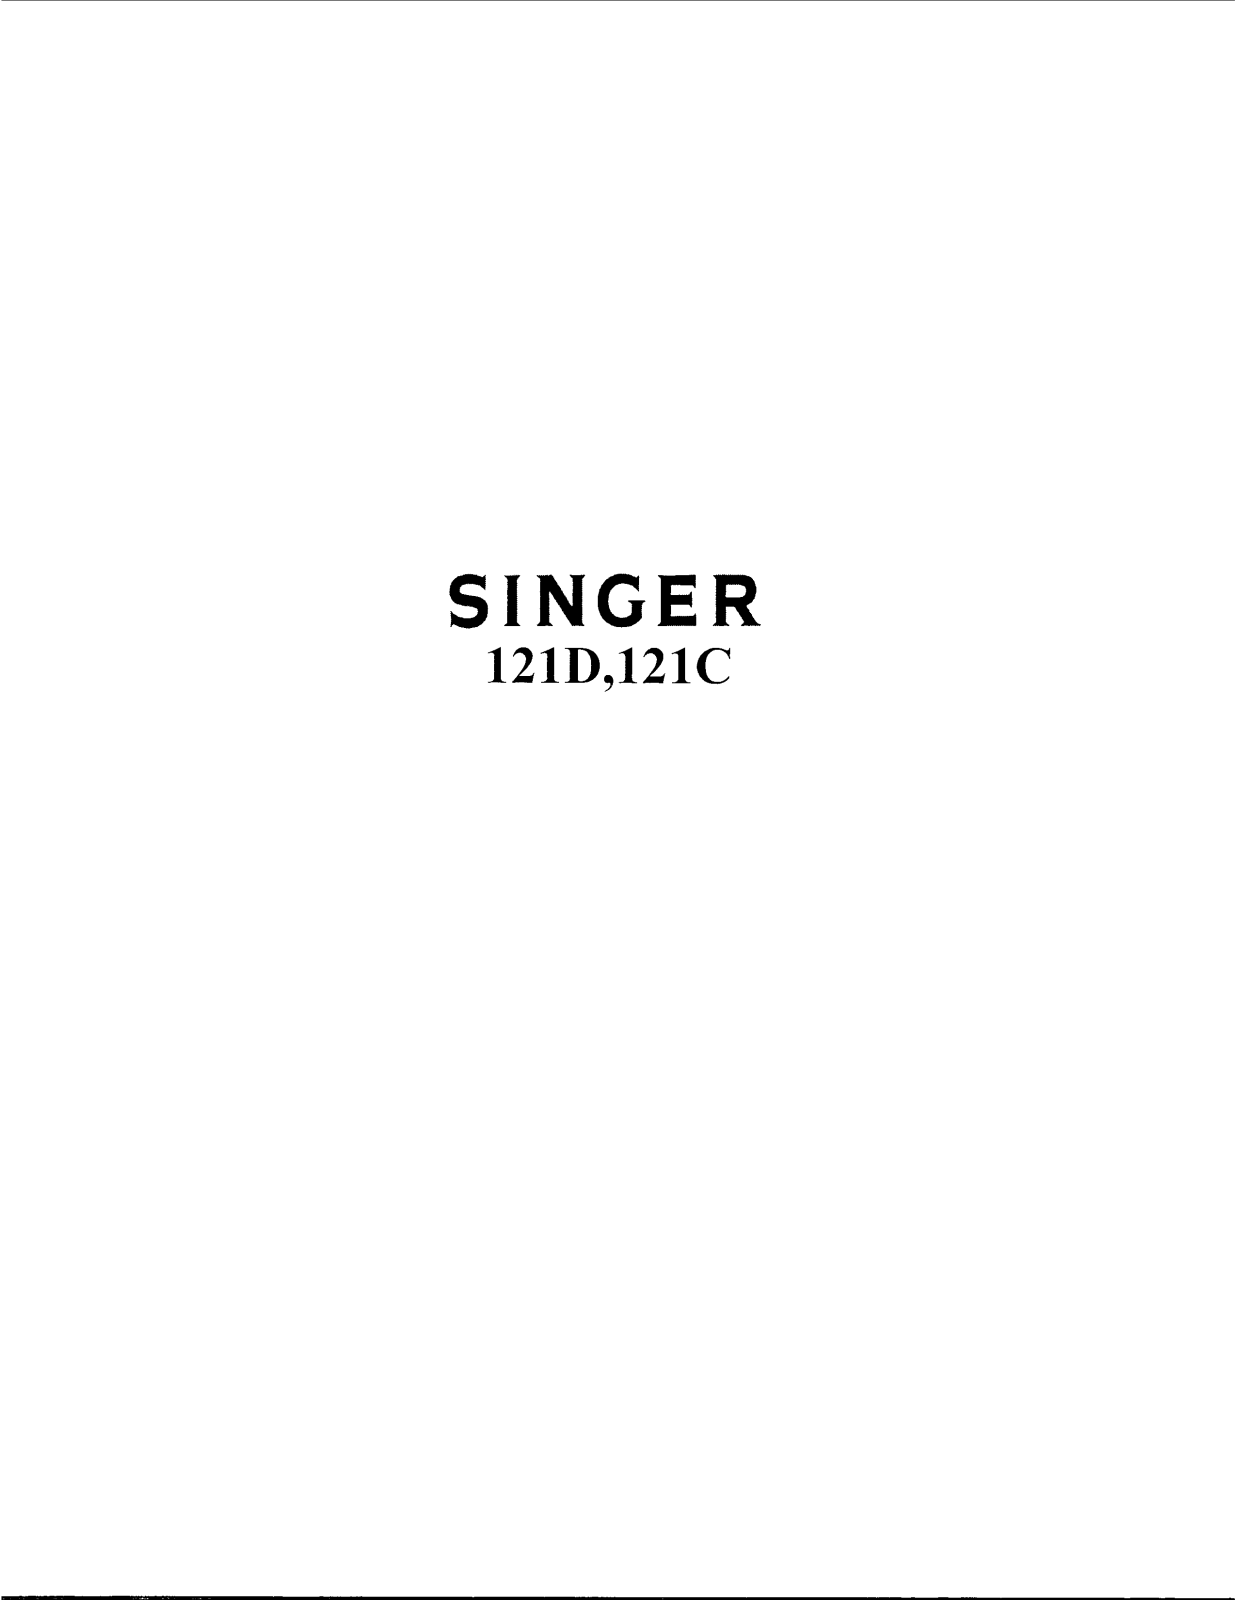 Singer 121D, 121C Service Manual